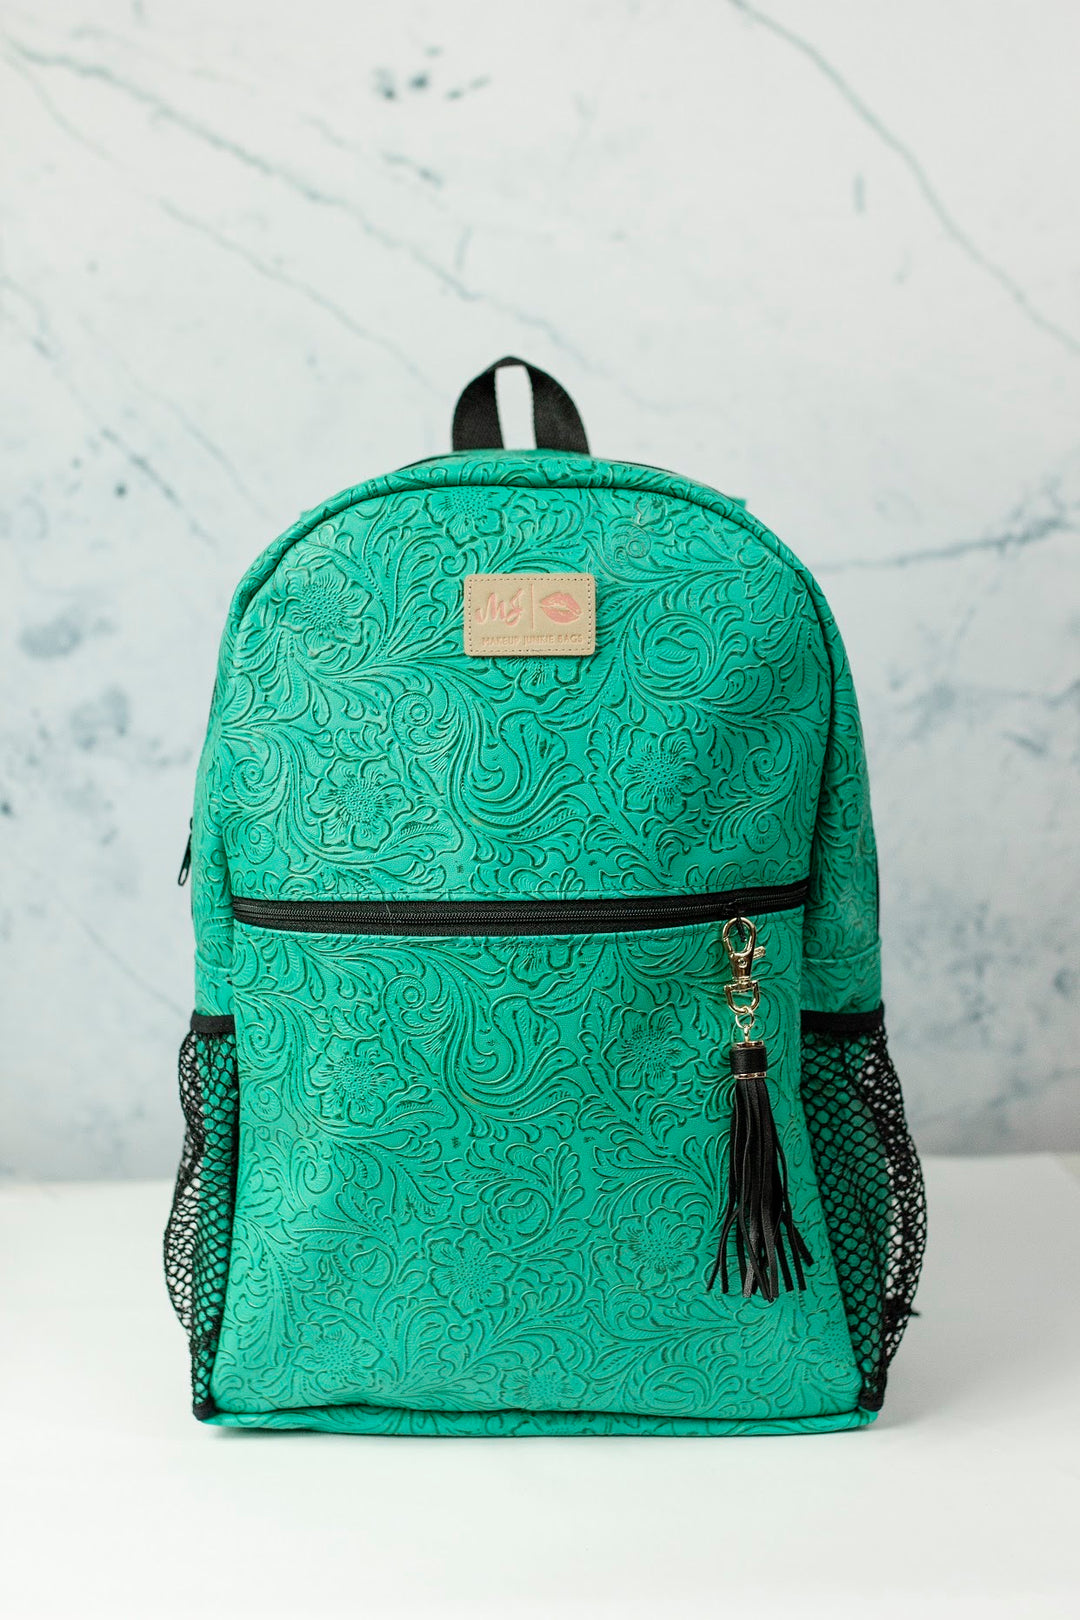 Makeup Junkie Bags - Turquoise Dream Backpack [Pre-Order]